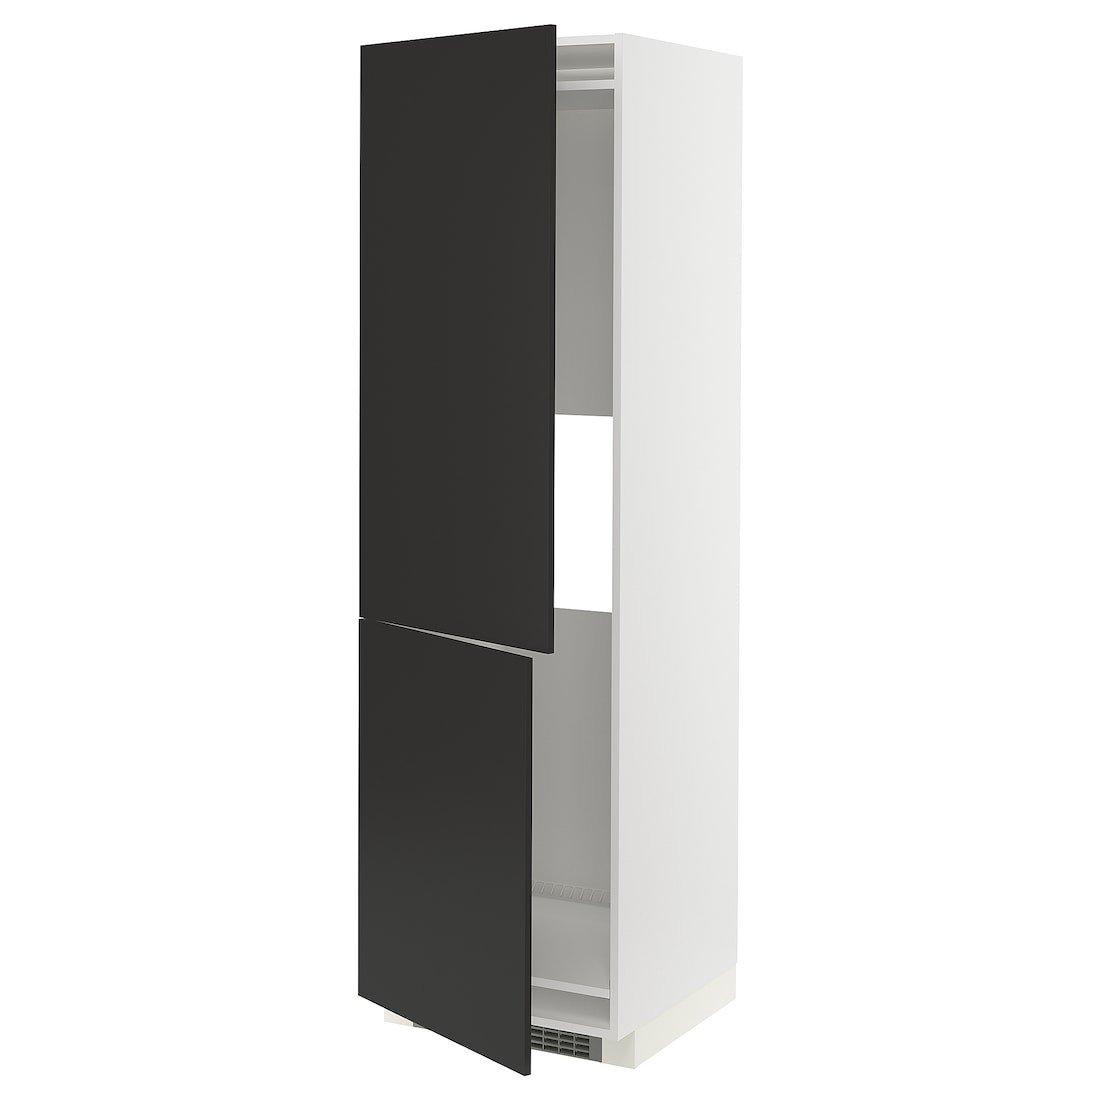 IKEA METOD МЕТОД Высокий шкаф для холодильника / морозильника, белый / Nickebo матовый антрацит, 60x60x200 см 79498493 | 794.984.93